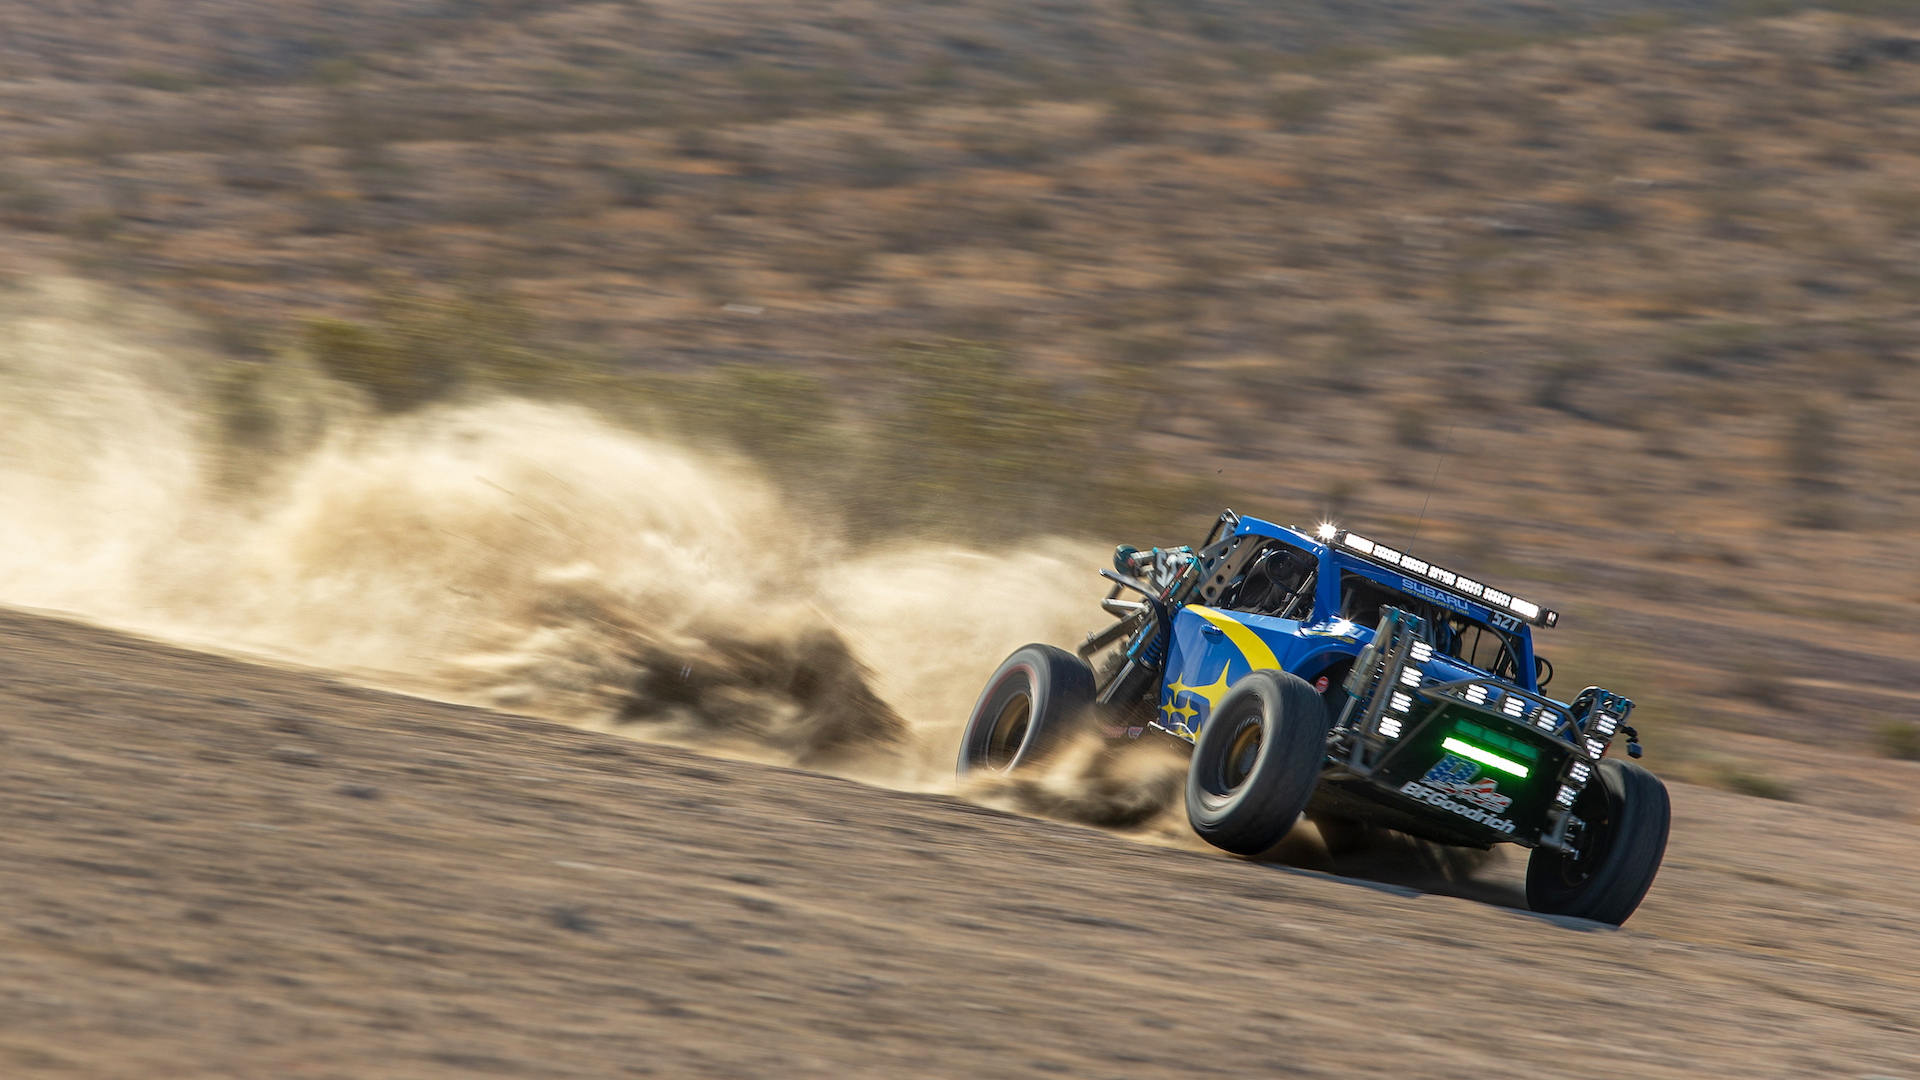 Subaru Crosstrek off-road desert racer